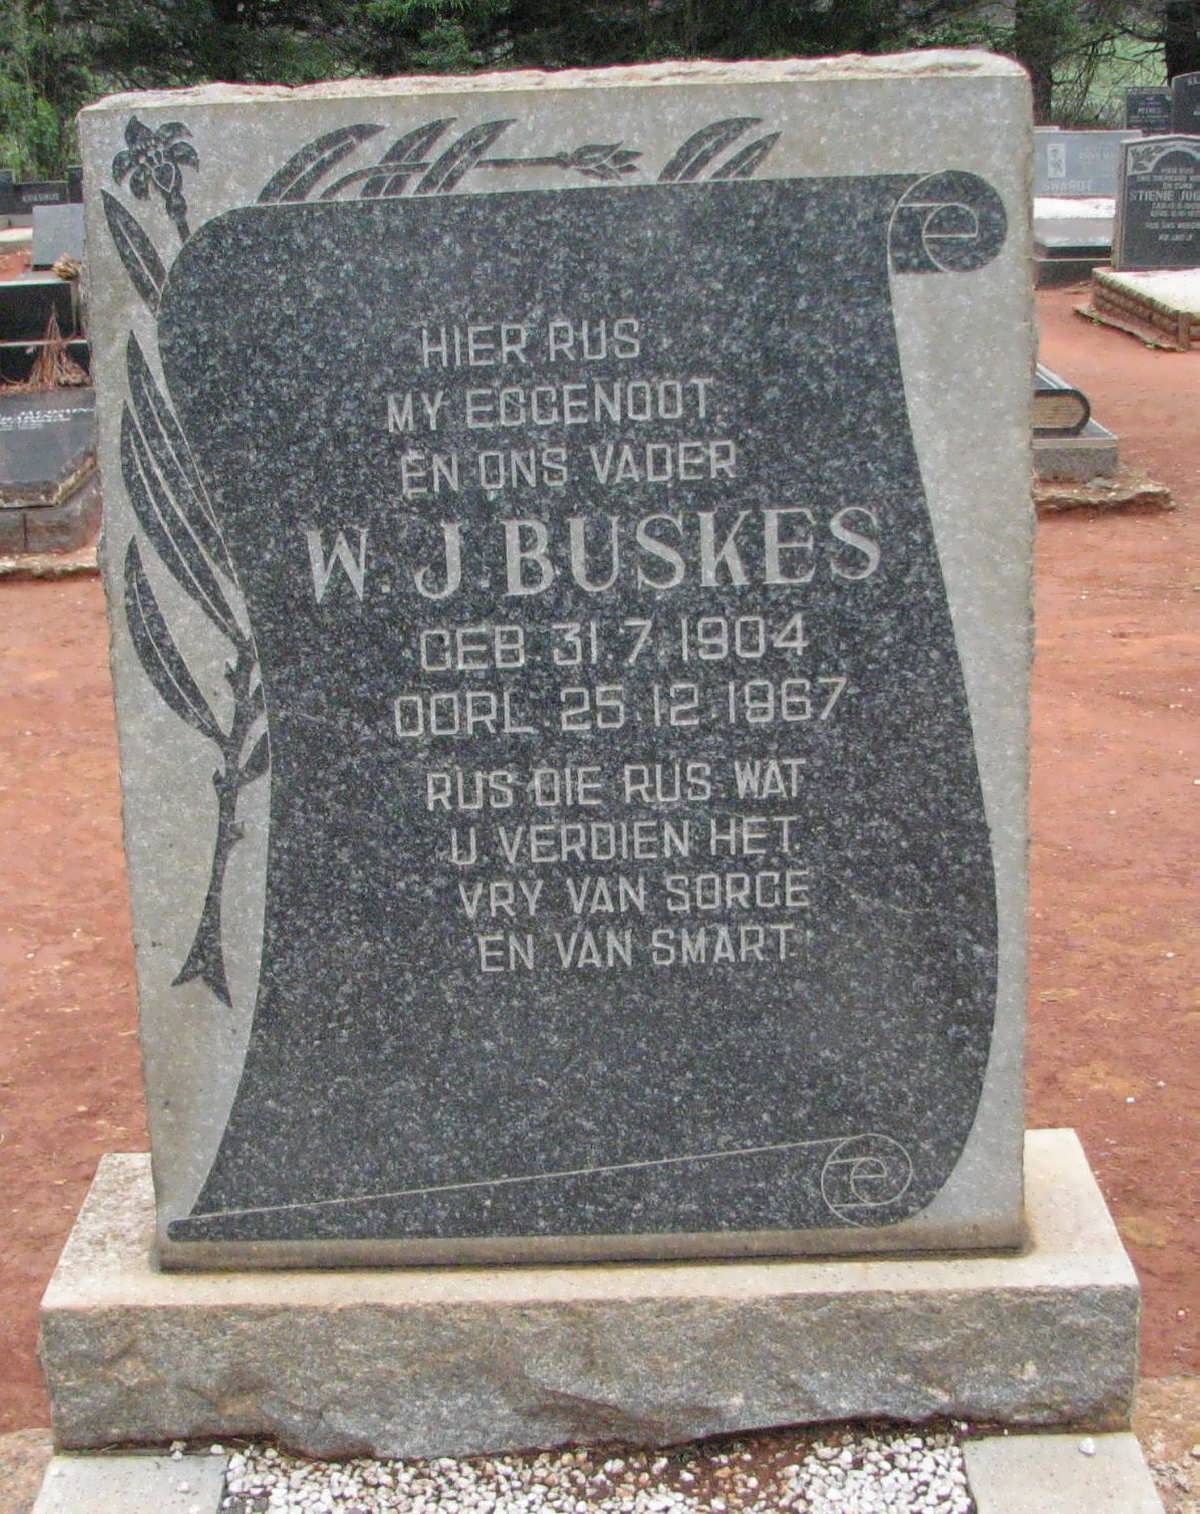 BUSKES W.J. 1904-1967